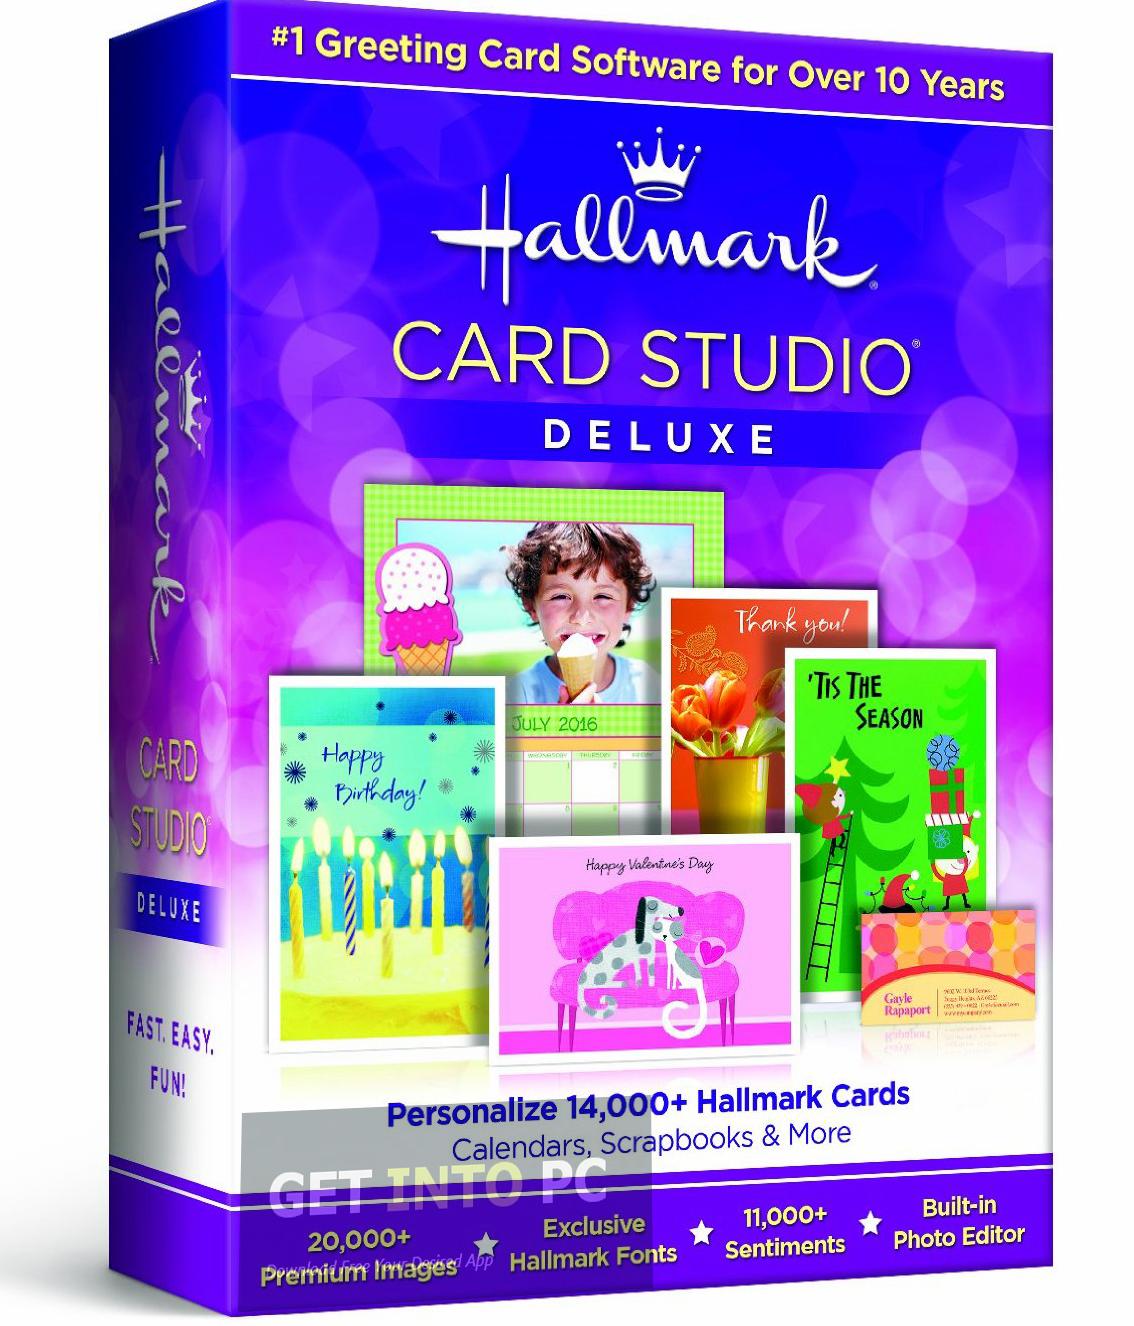 Hallmark card studio free download windows 10